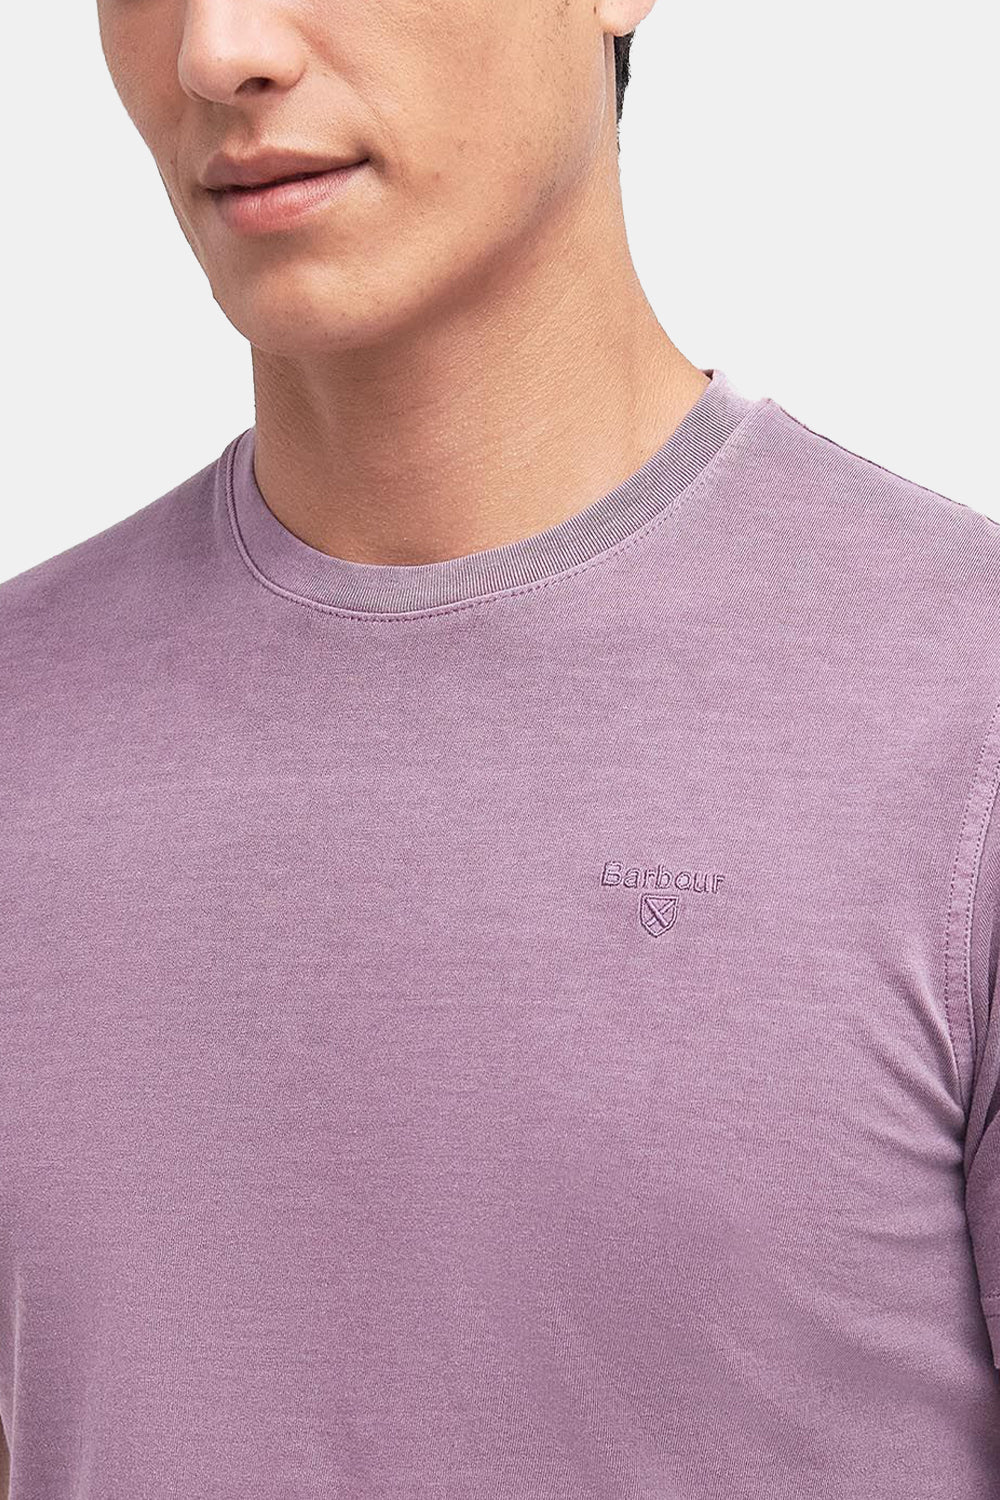 Barbour Garment Dyed T-Shirt (Purple)